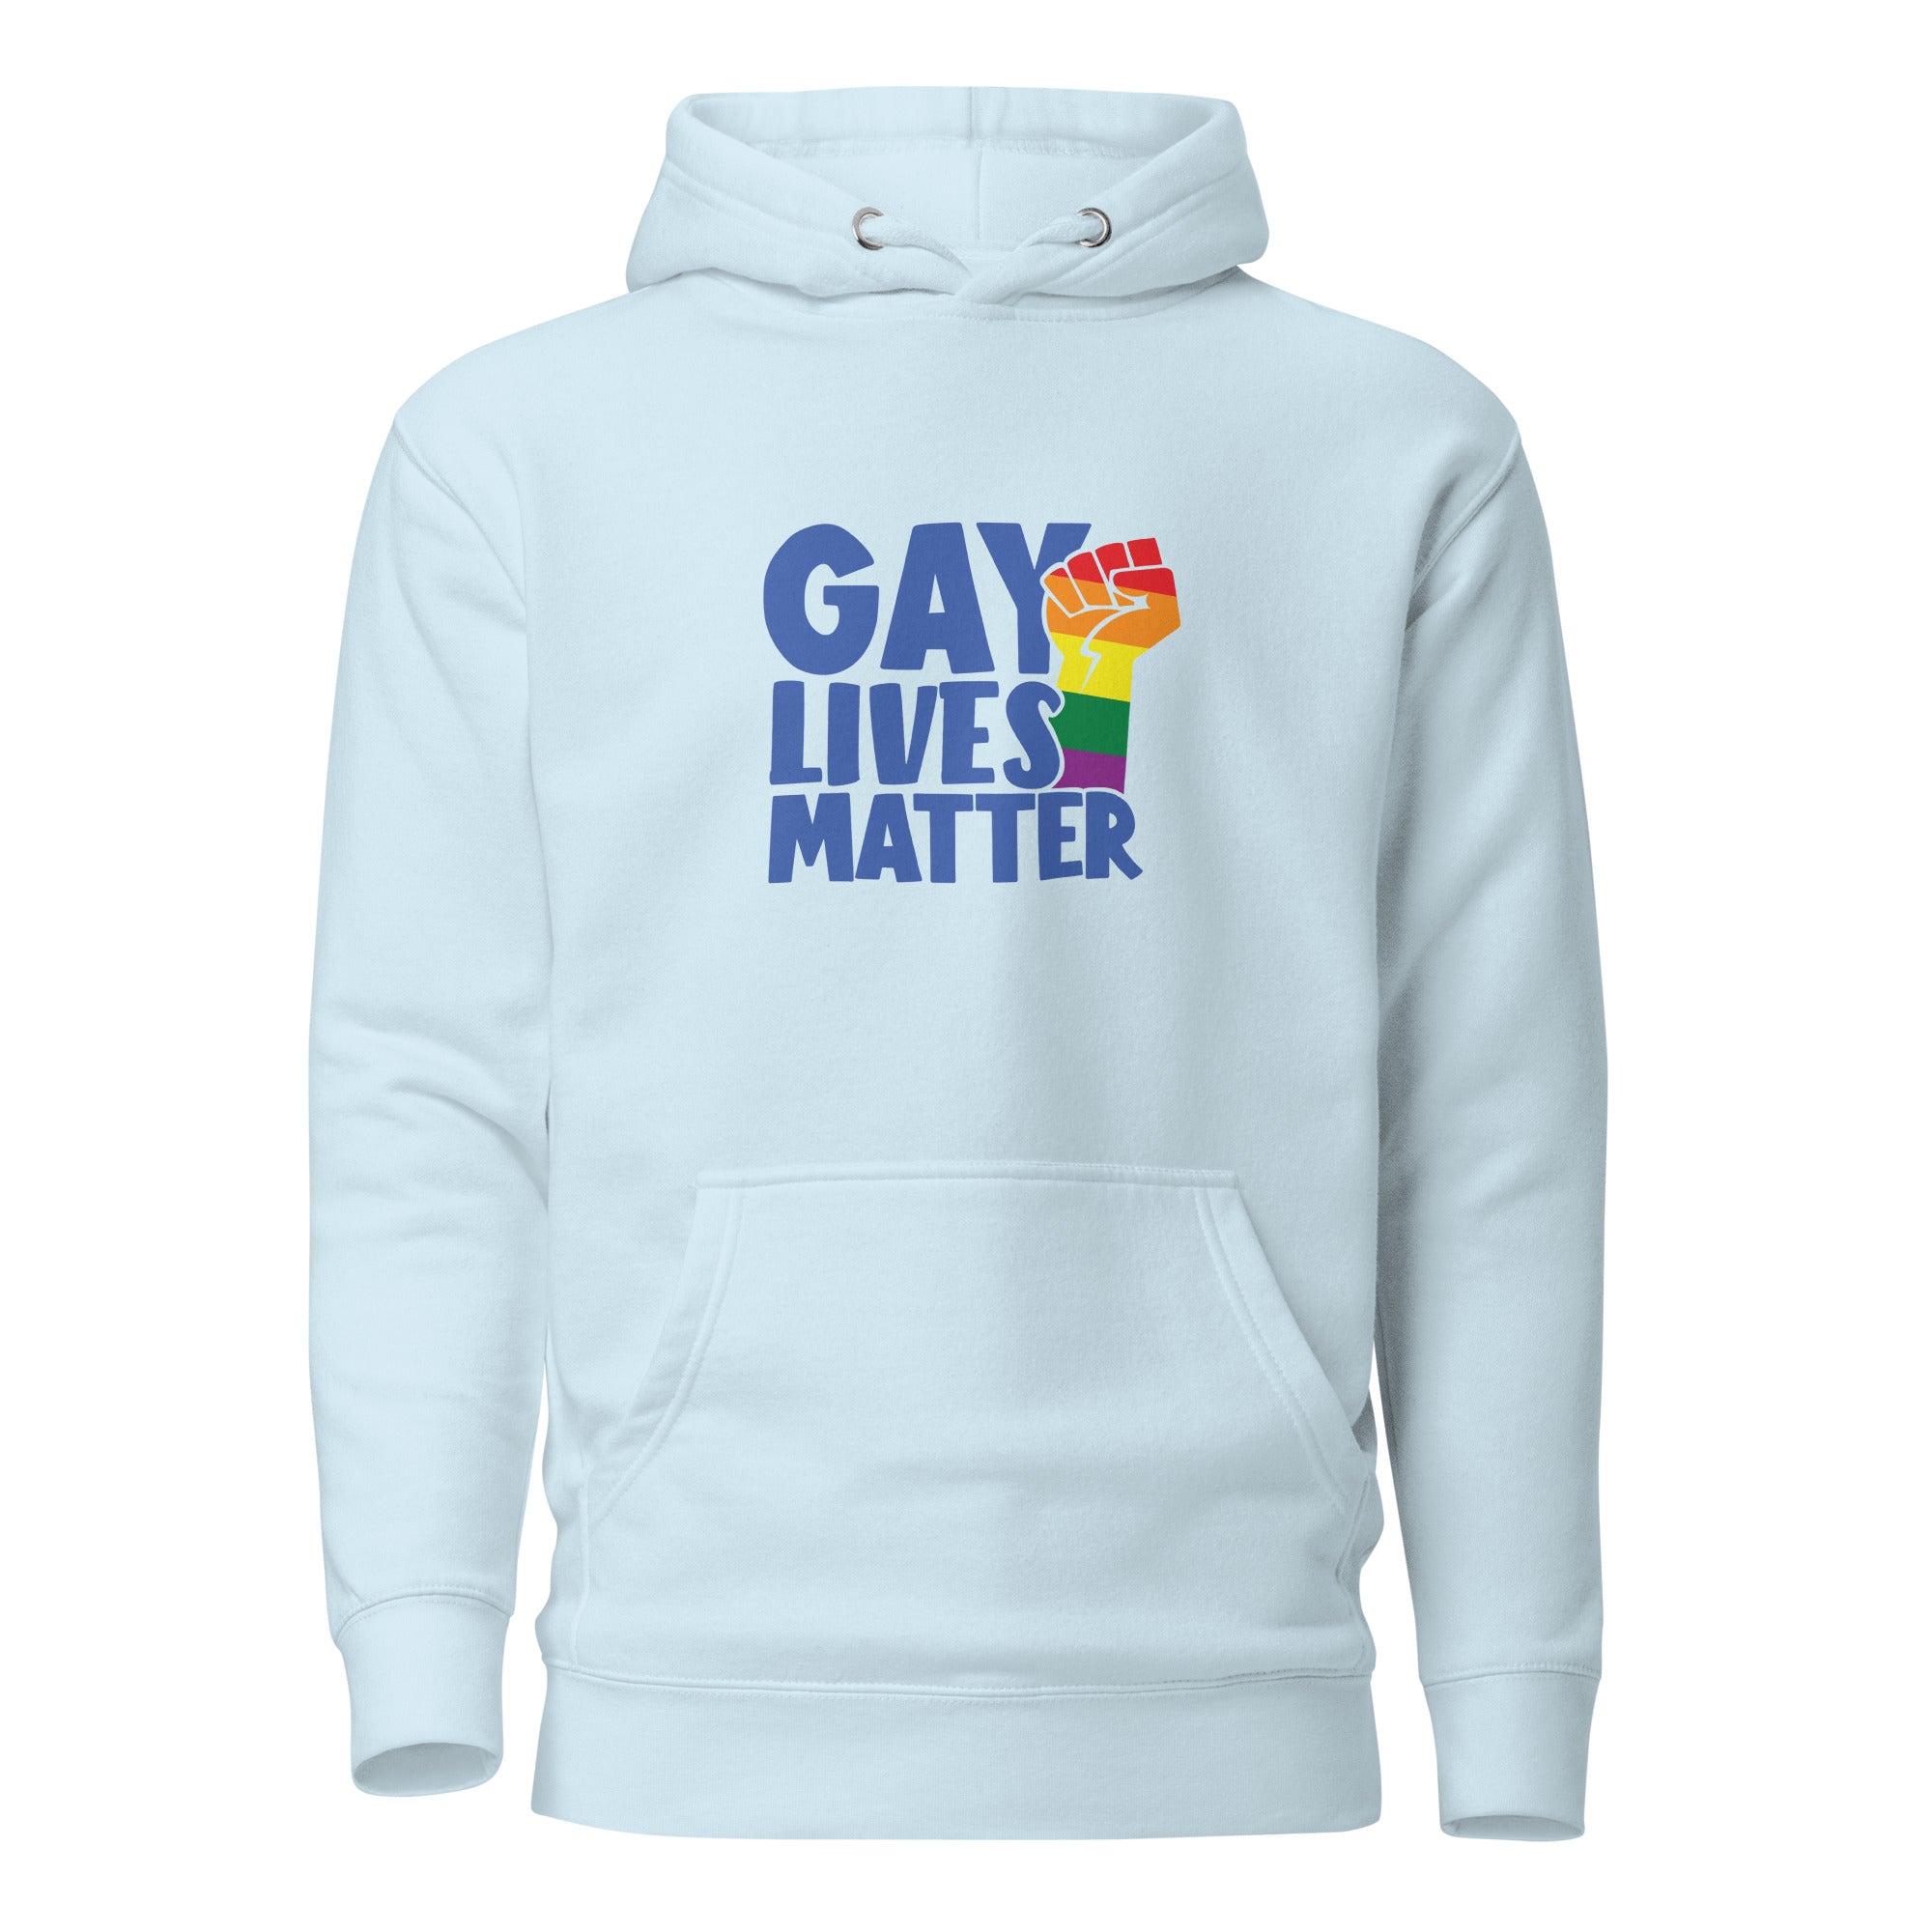 Unisex Hoodie- Gay lives matter